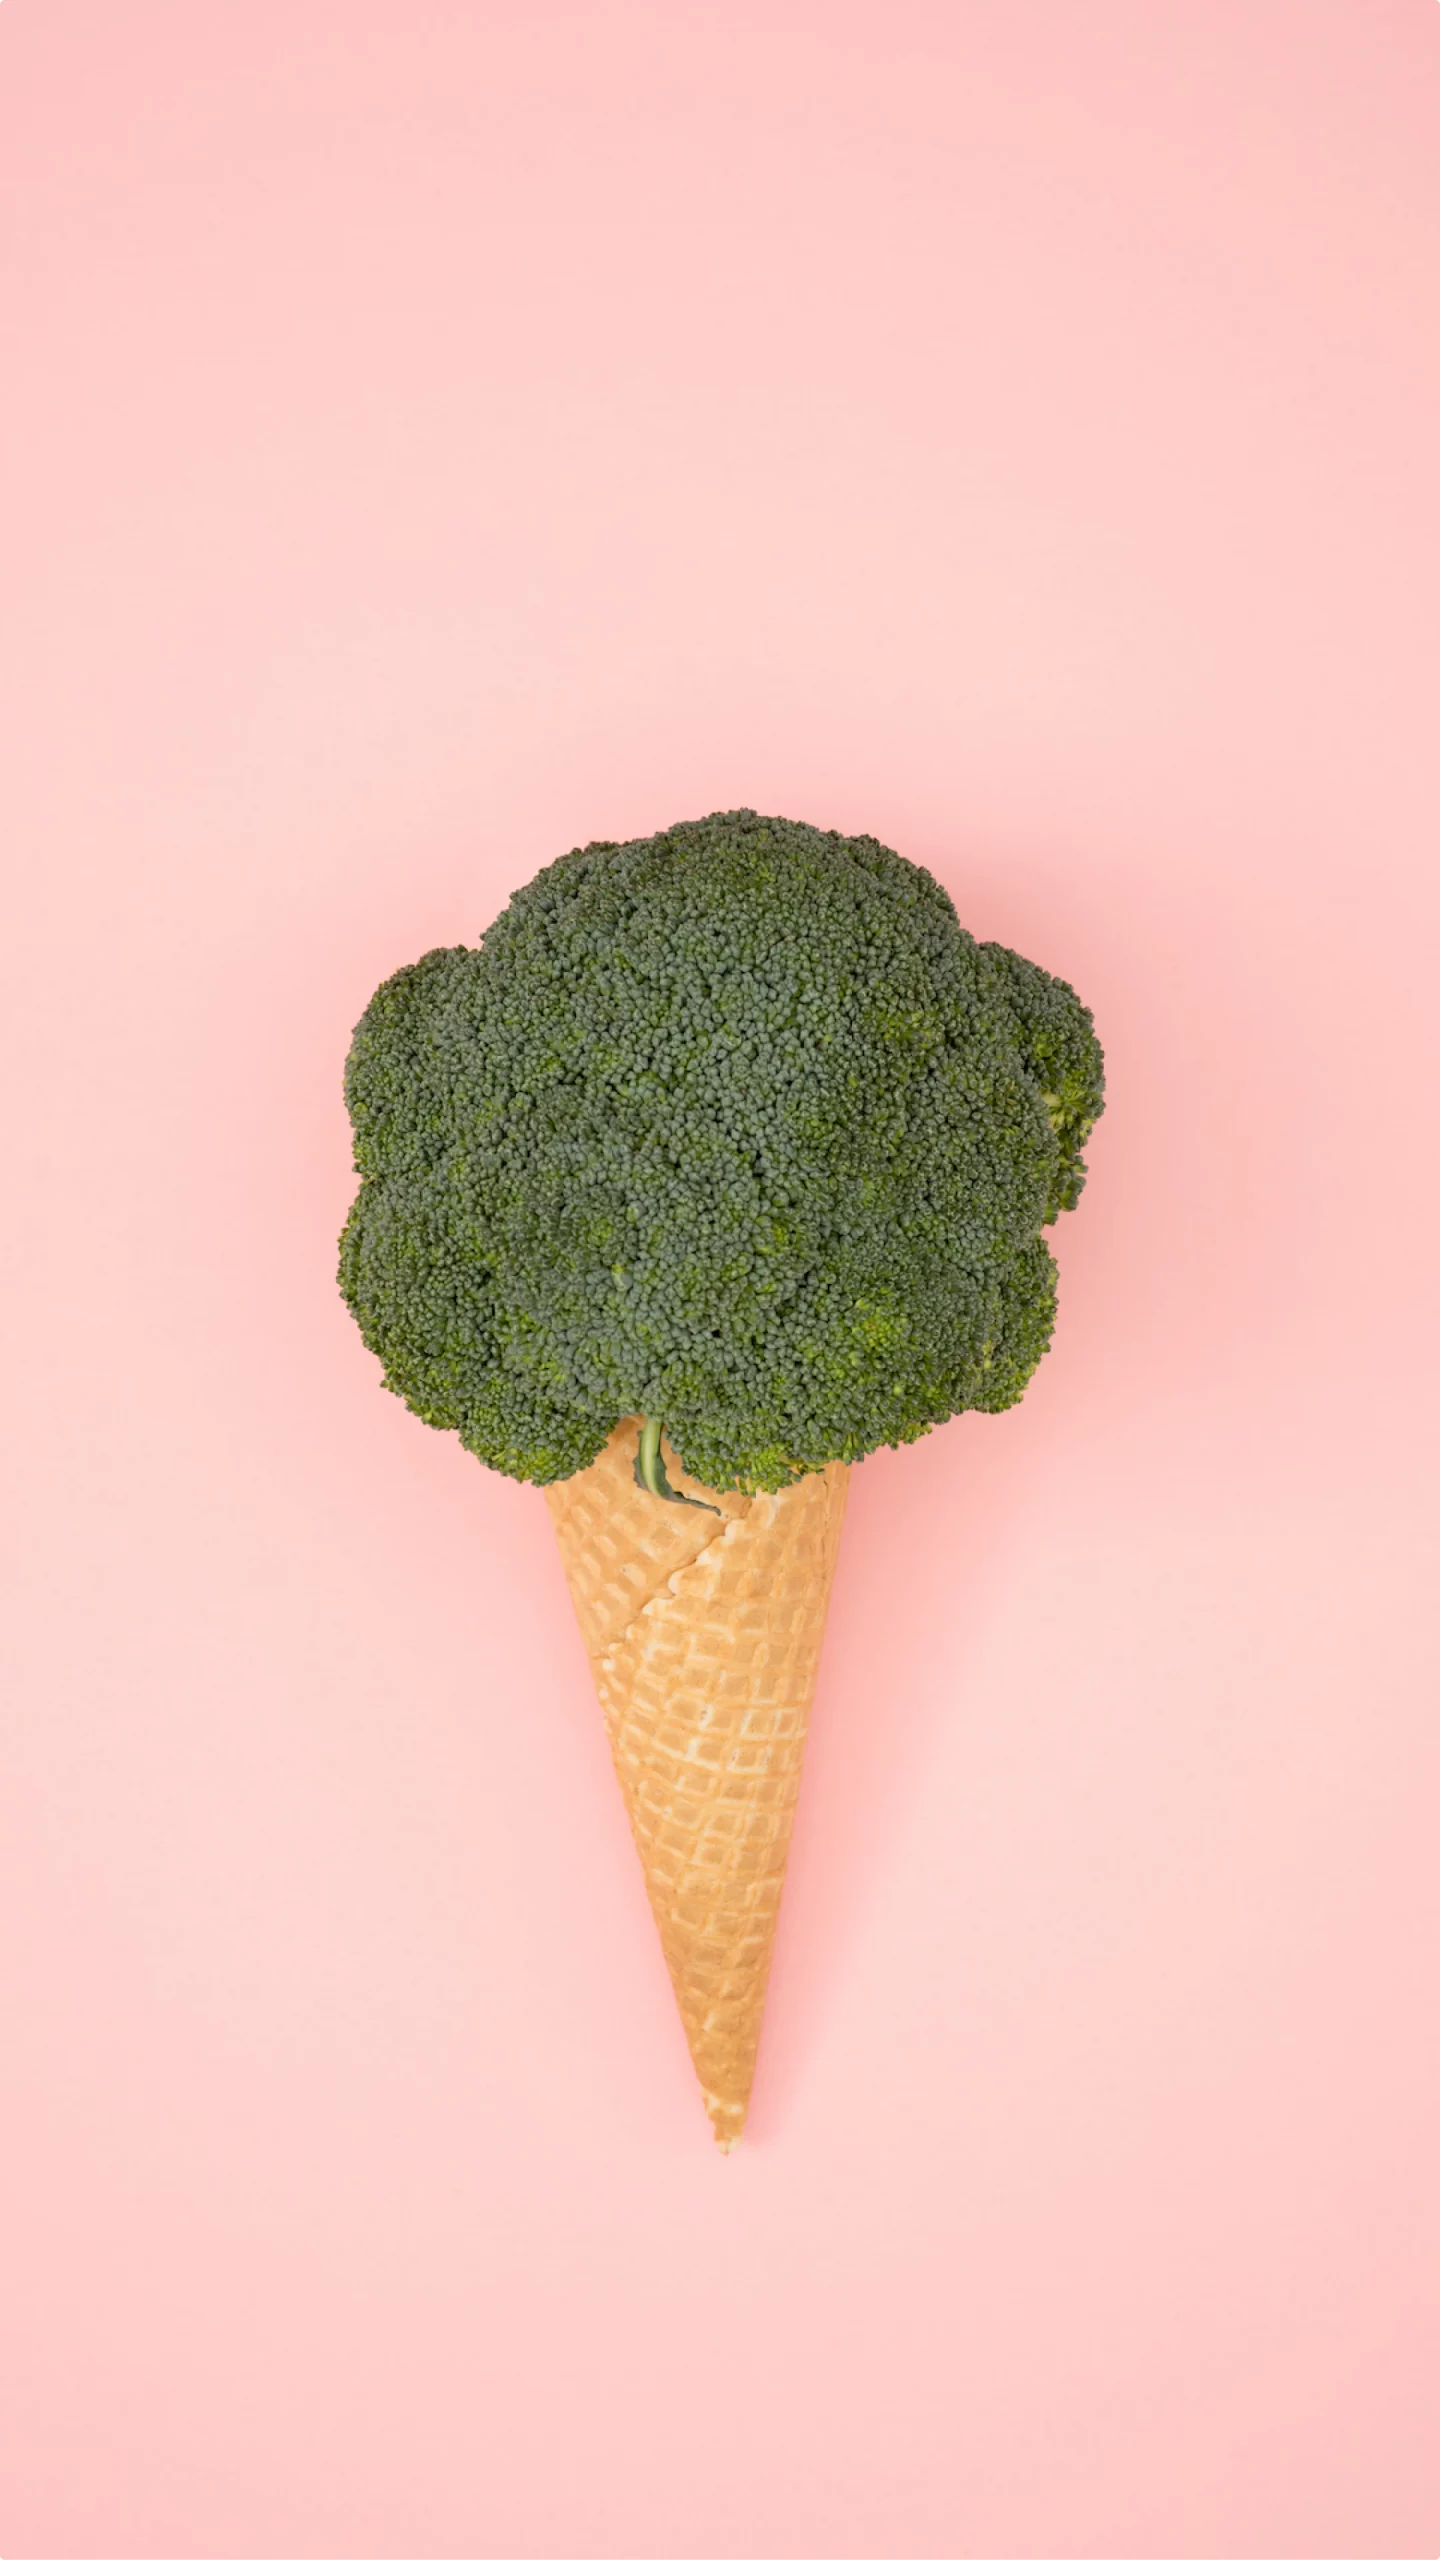 Broccoli in an ice cream shape funny wallpaper